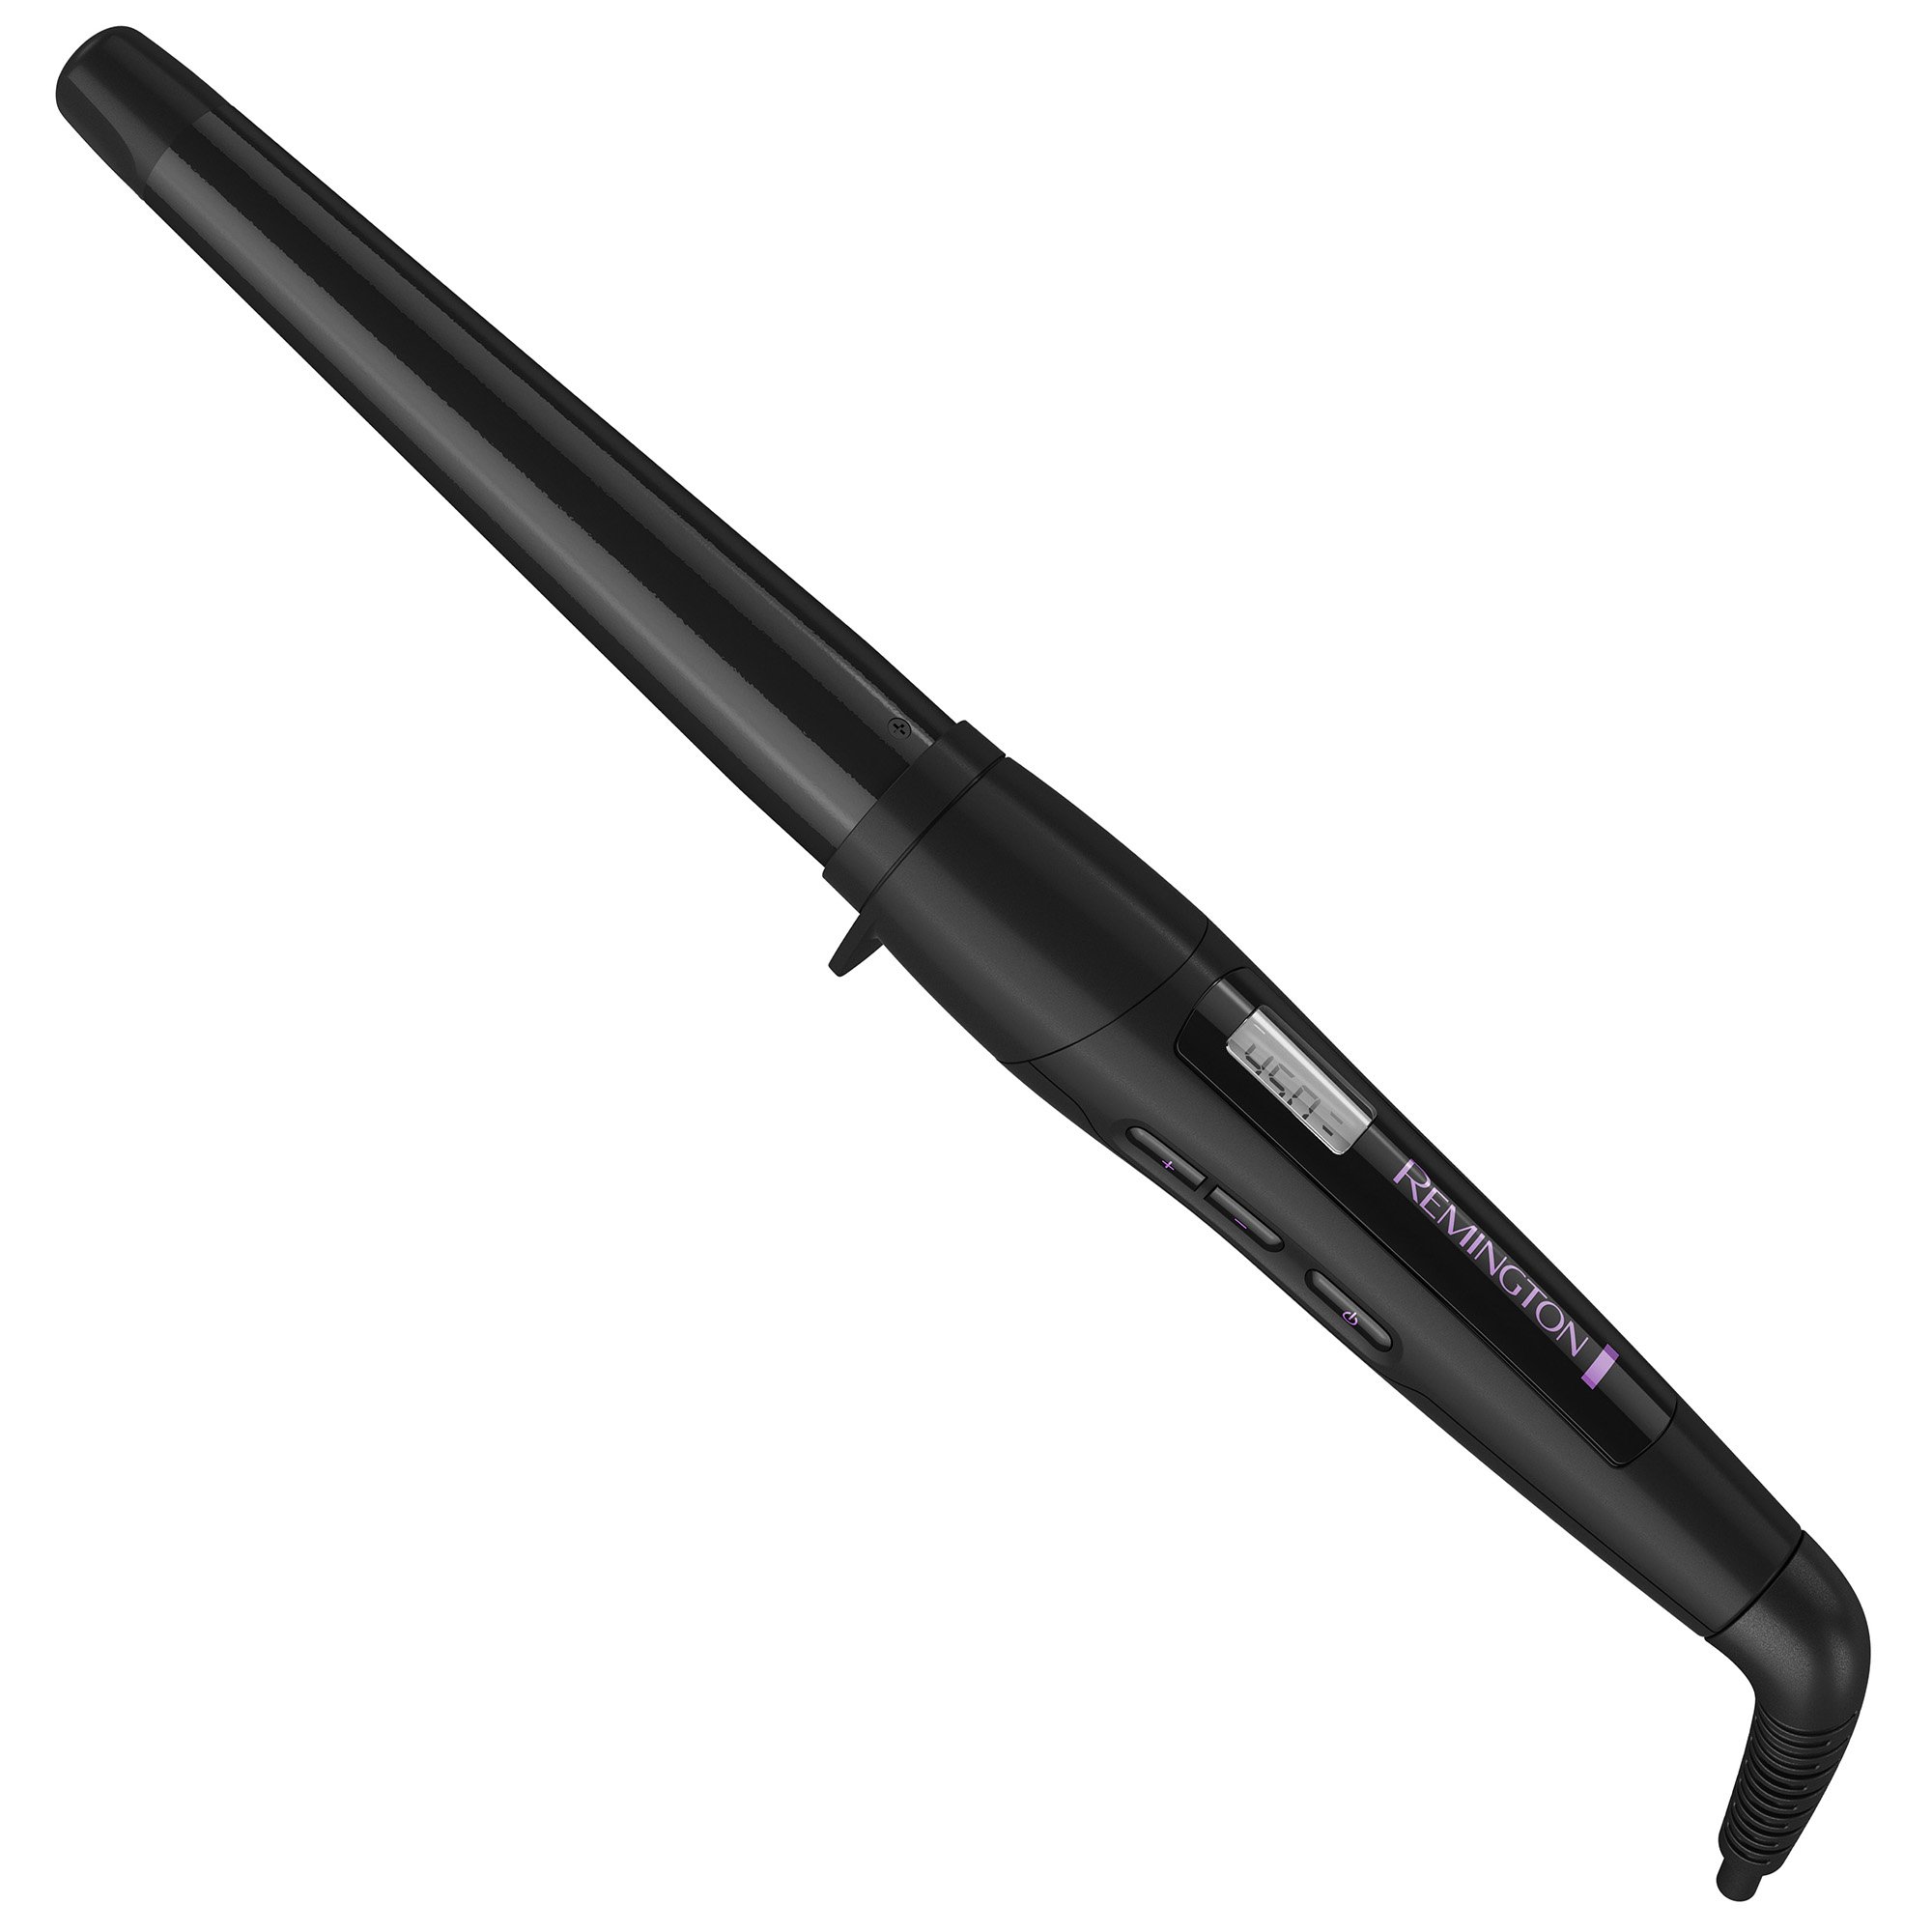 Remington CI63W1NA Professional Style Slim Curling Wand, Long Lasting, Medium-sized Curls